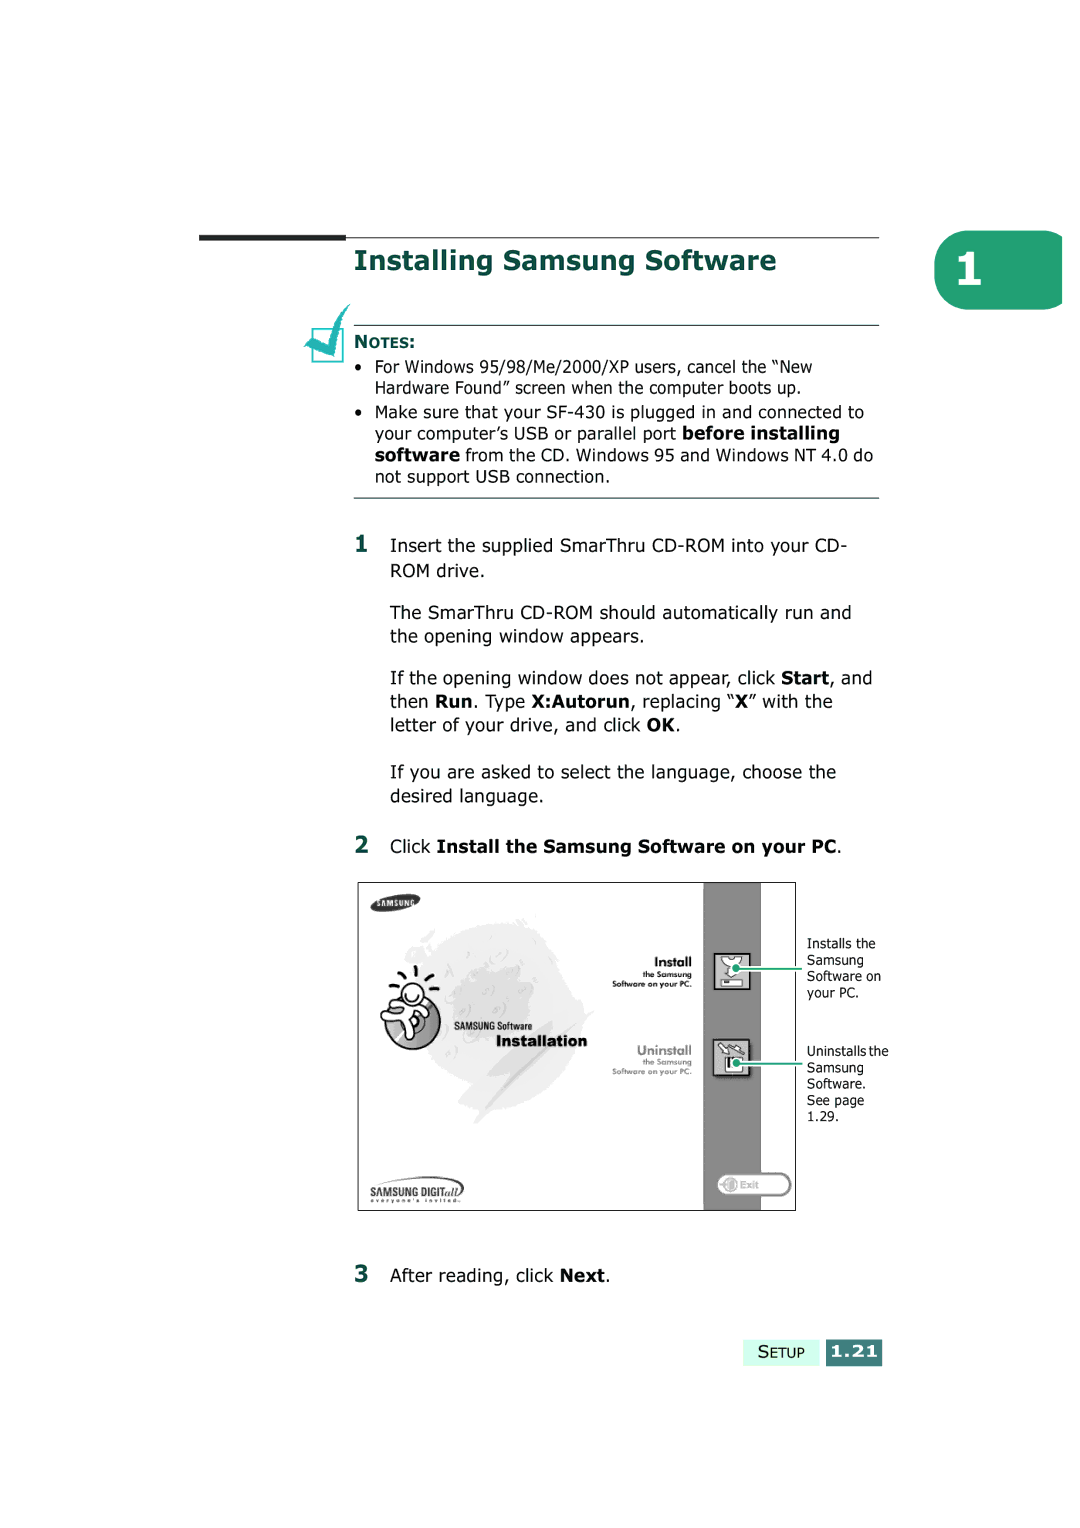 Samsung SF-430 manual Installing Samsung Software, Click Install the Samsung Software on your PC, After reading, click Next 